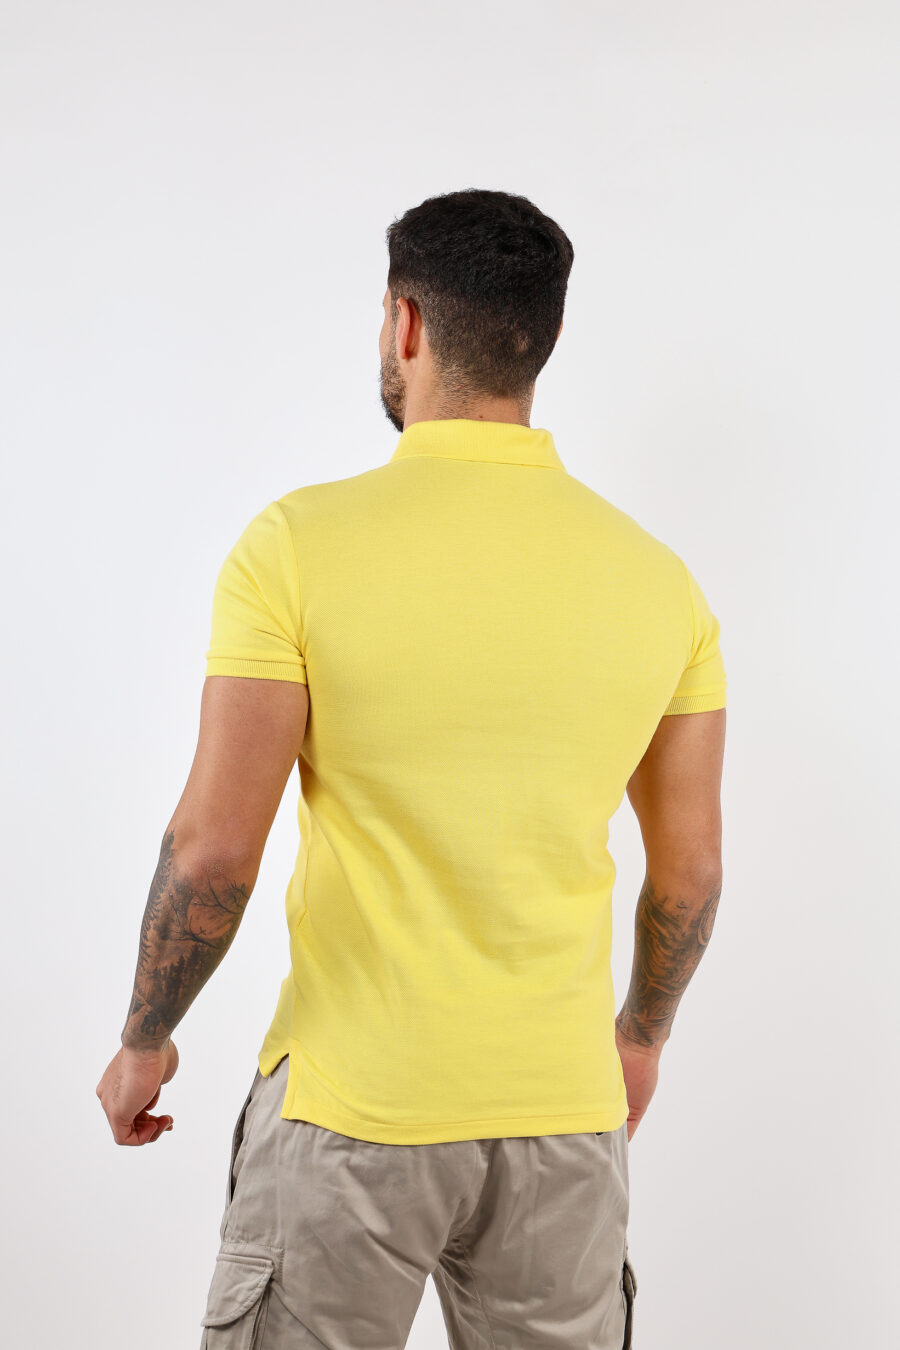 Camiseta amarilla y azul con minilogo "polo" - BLS Fashion 195